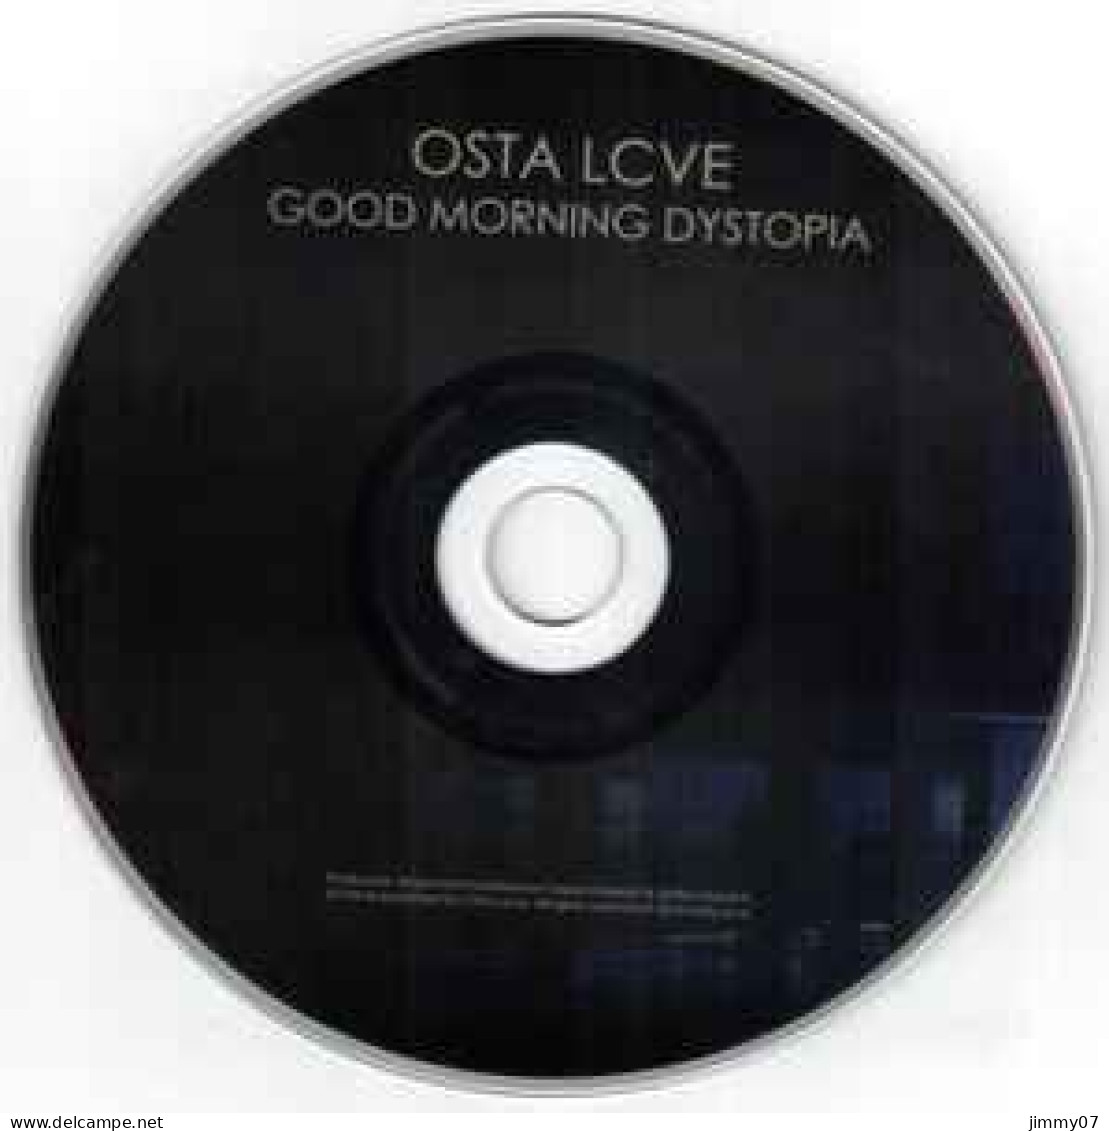 Osta Love - Good Morning Dystopia (CD, Album) - Rock